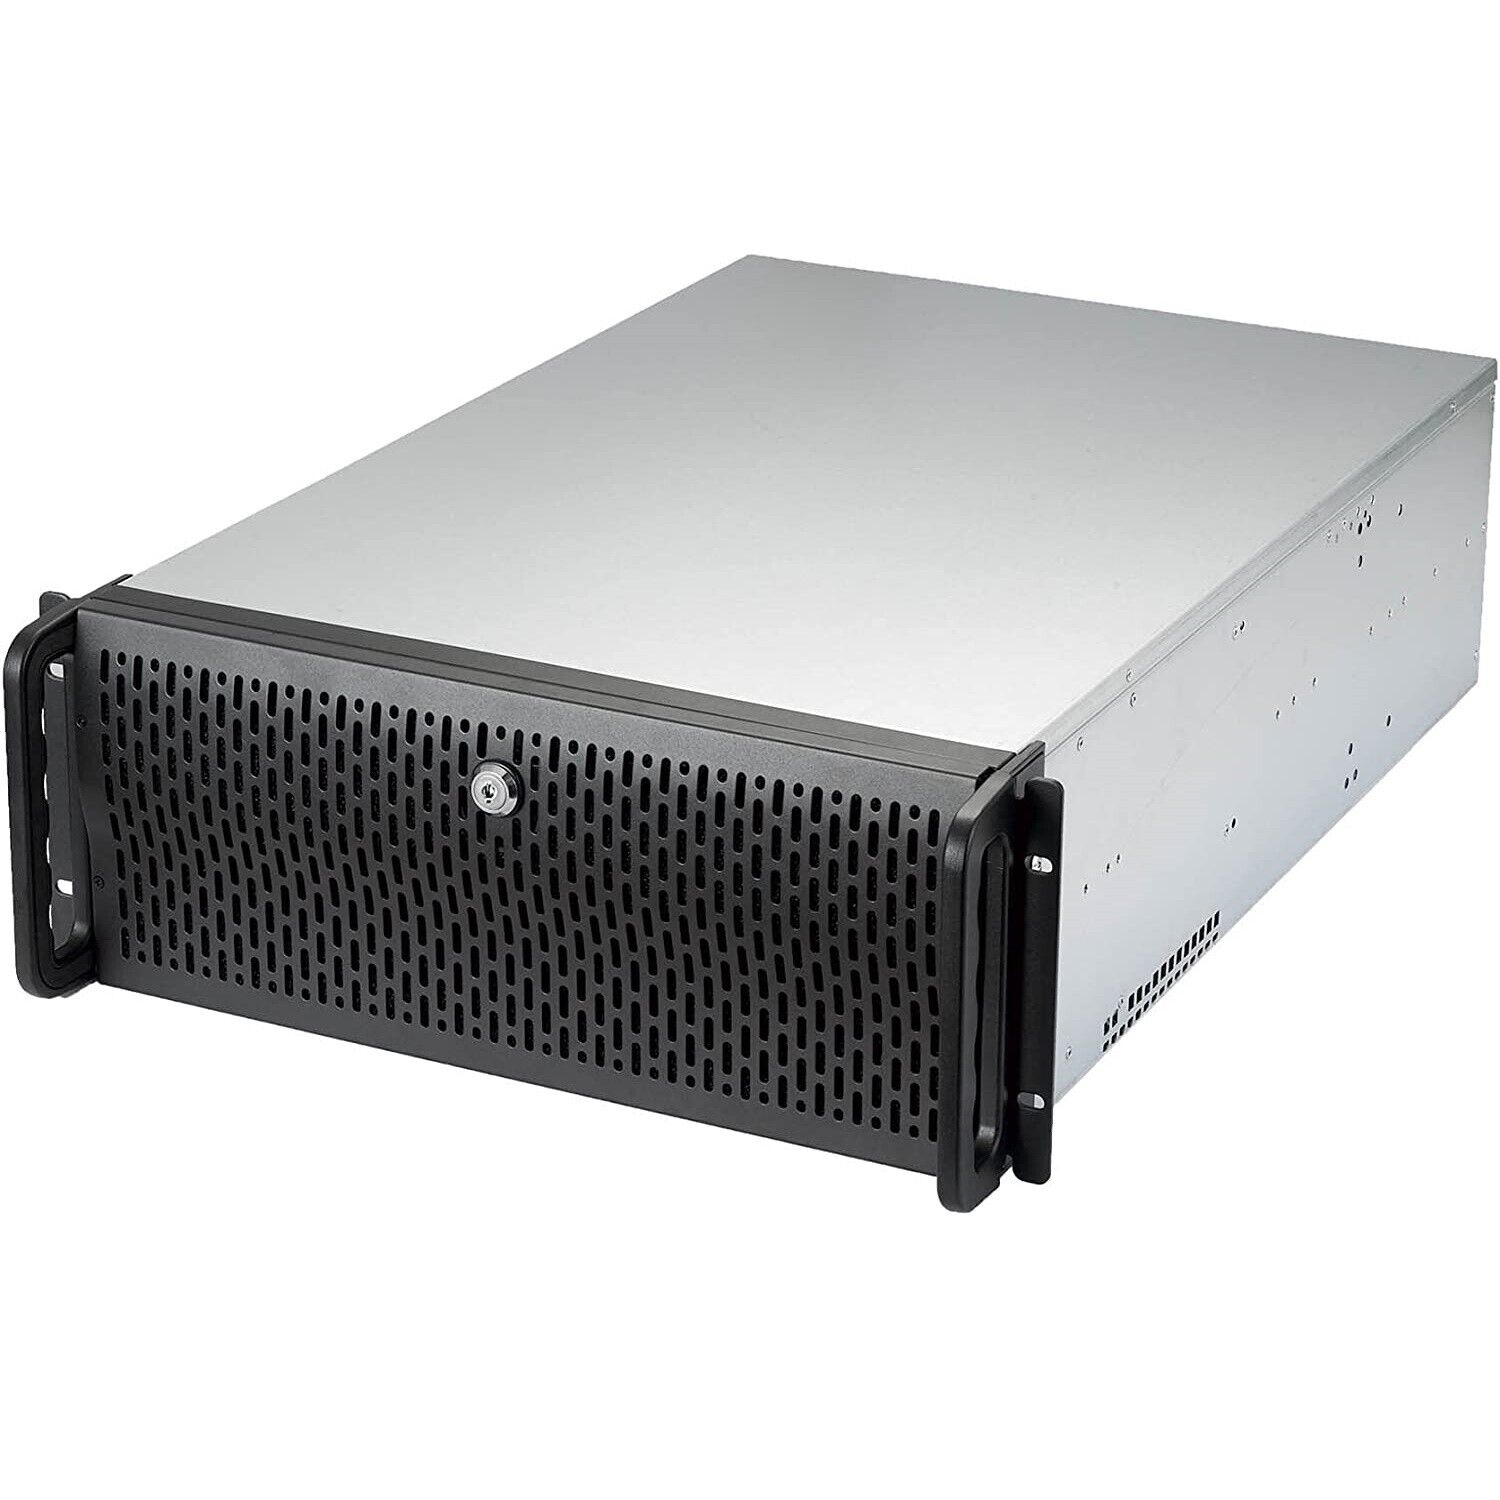 Rosewill RSV-L4500U 4U Server Chassis 15 Bay Rackmount Case 15x 3.5 HDD Bays